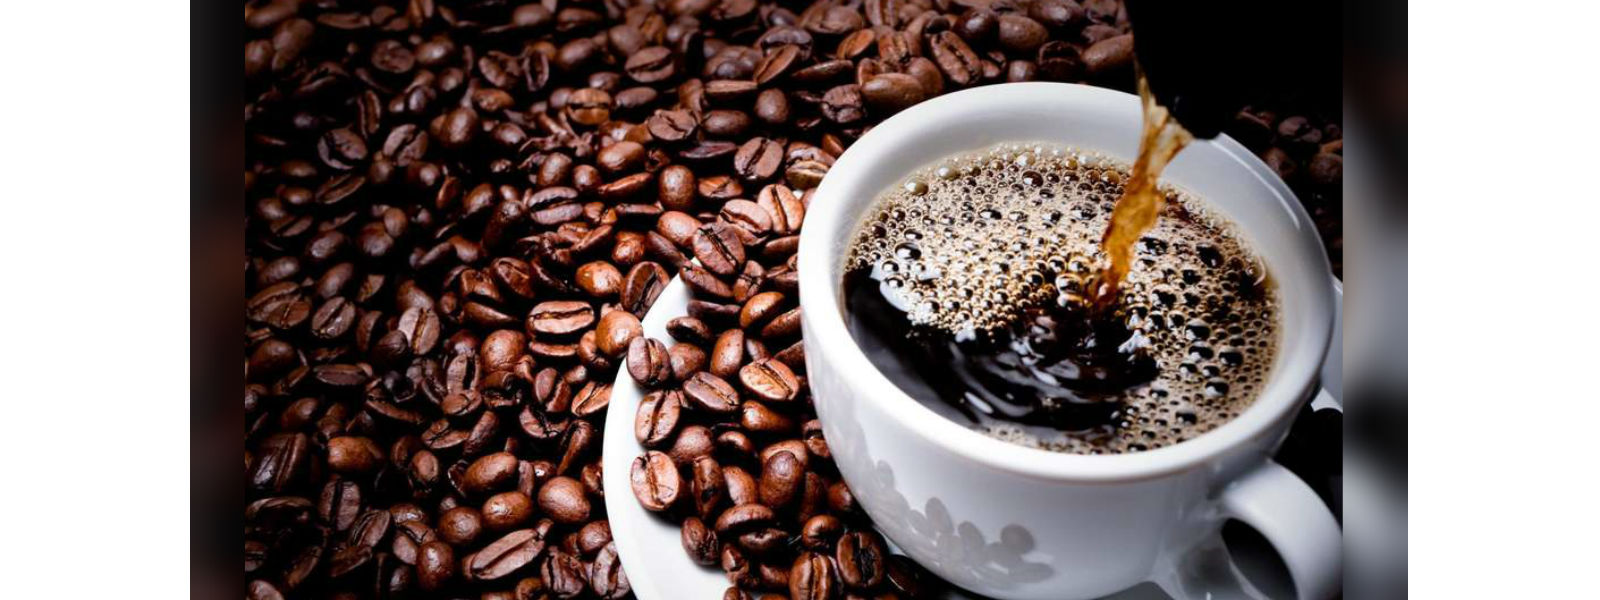 Researchers reveal coffee helps reboot batteries